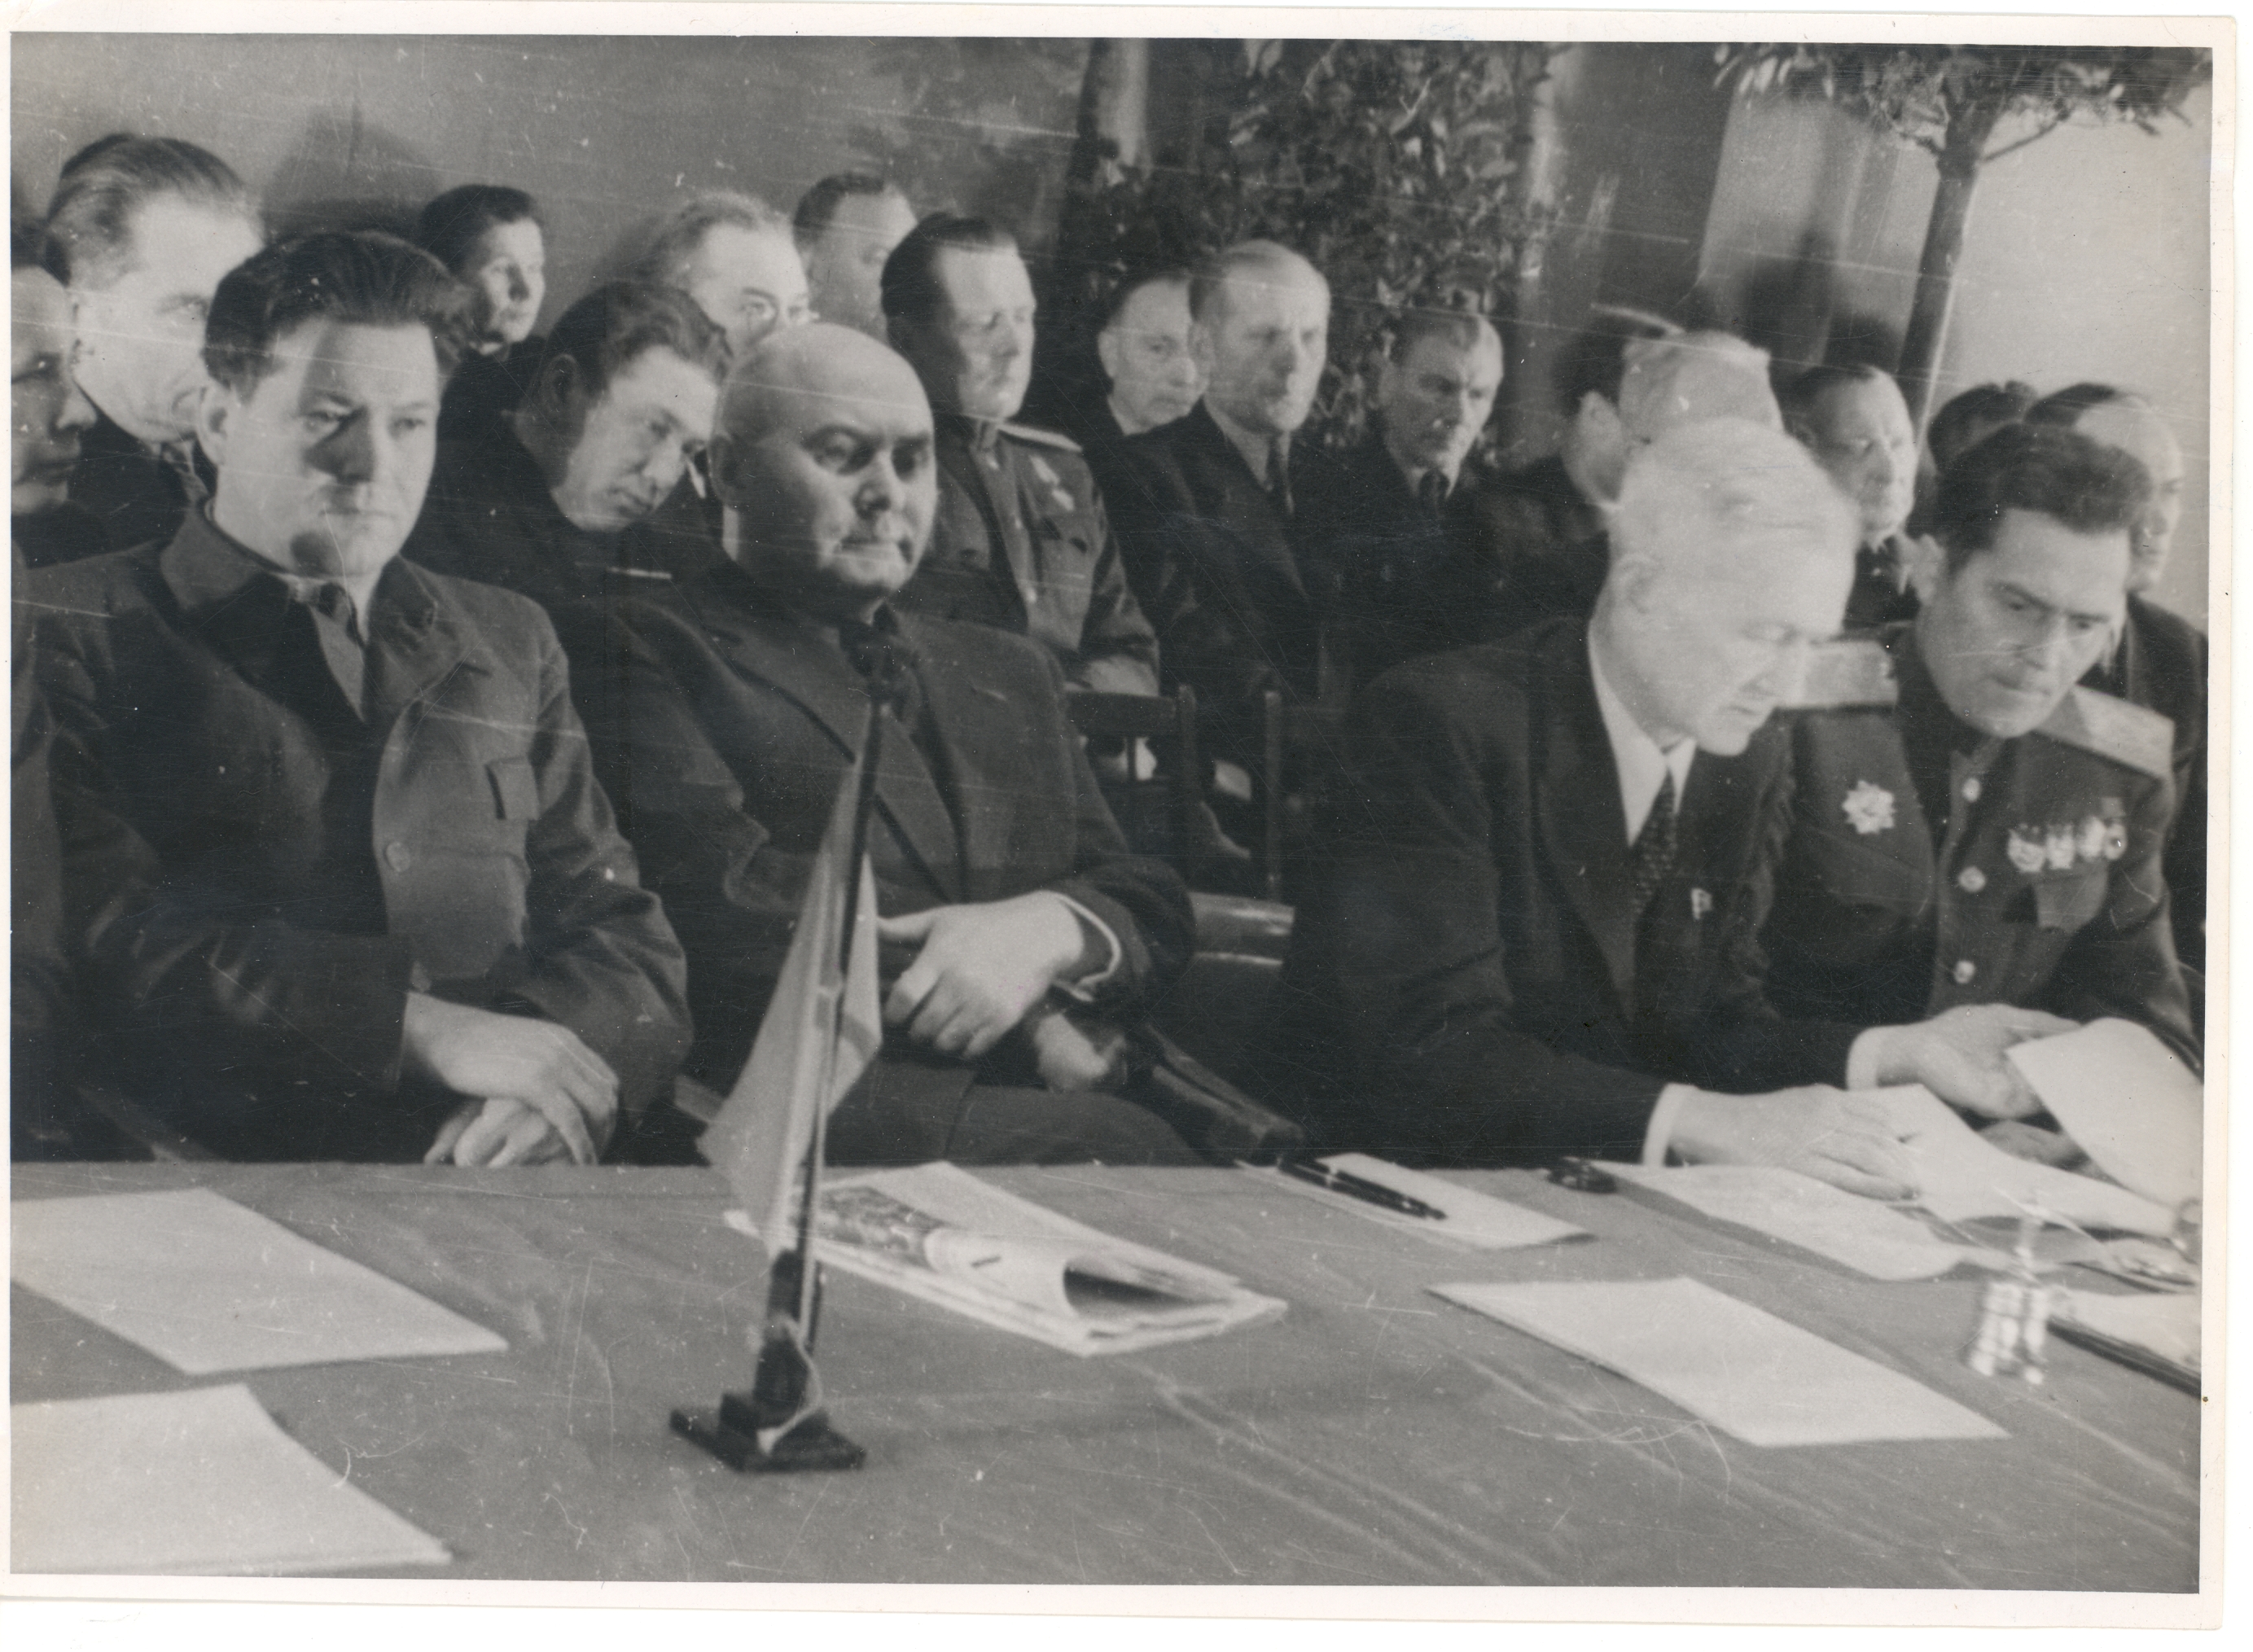 Presidium of the Intelligent Congress [1945] Second John Vares-Barbarus from left